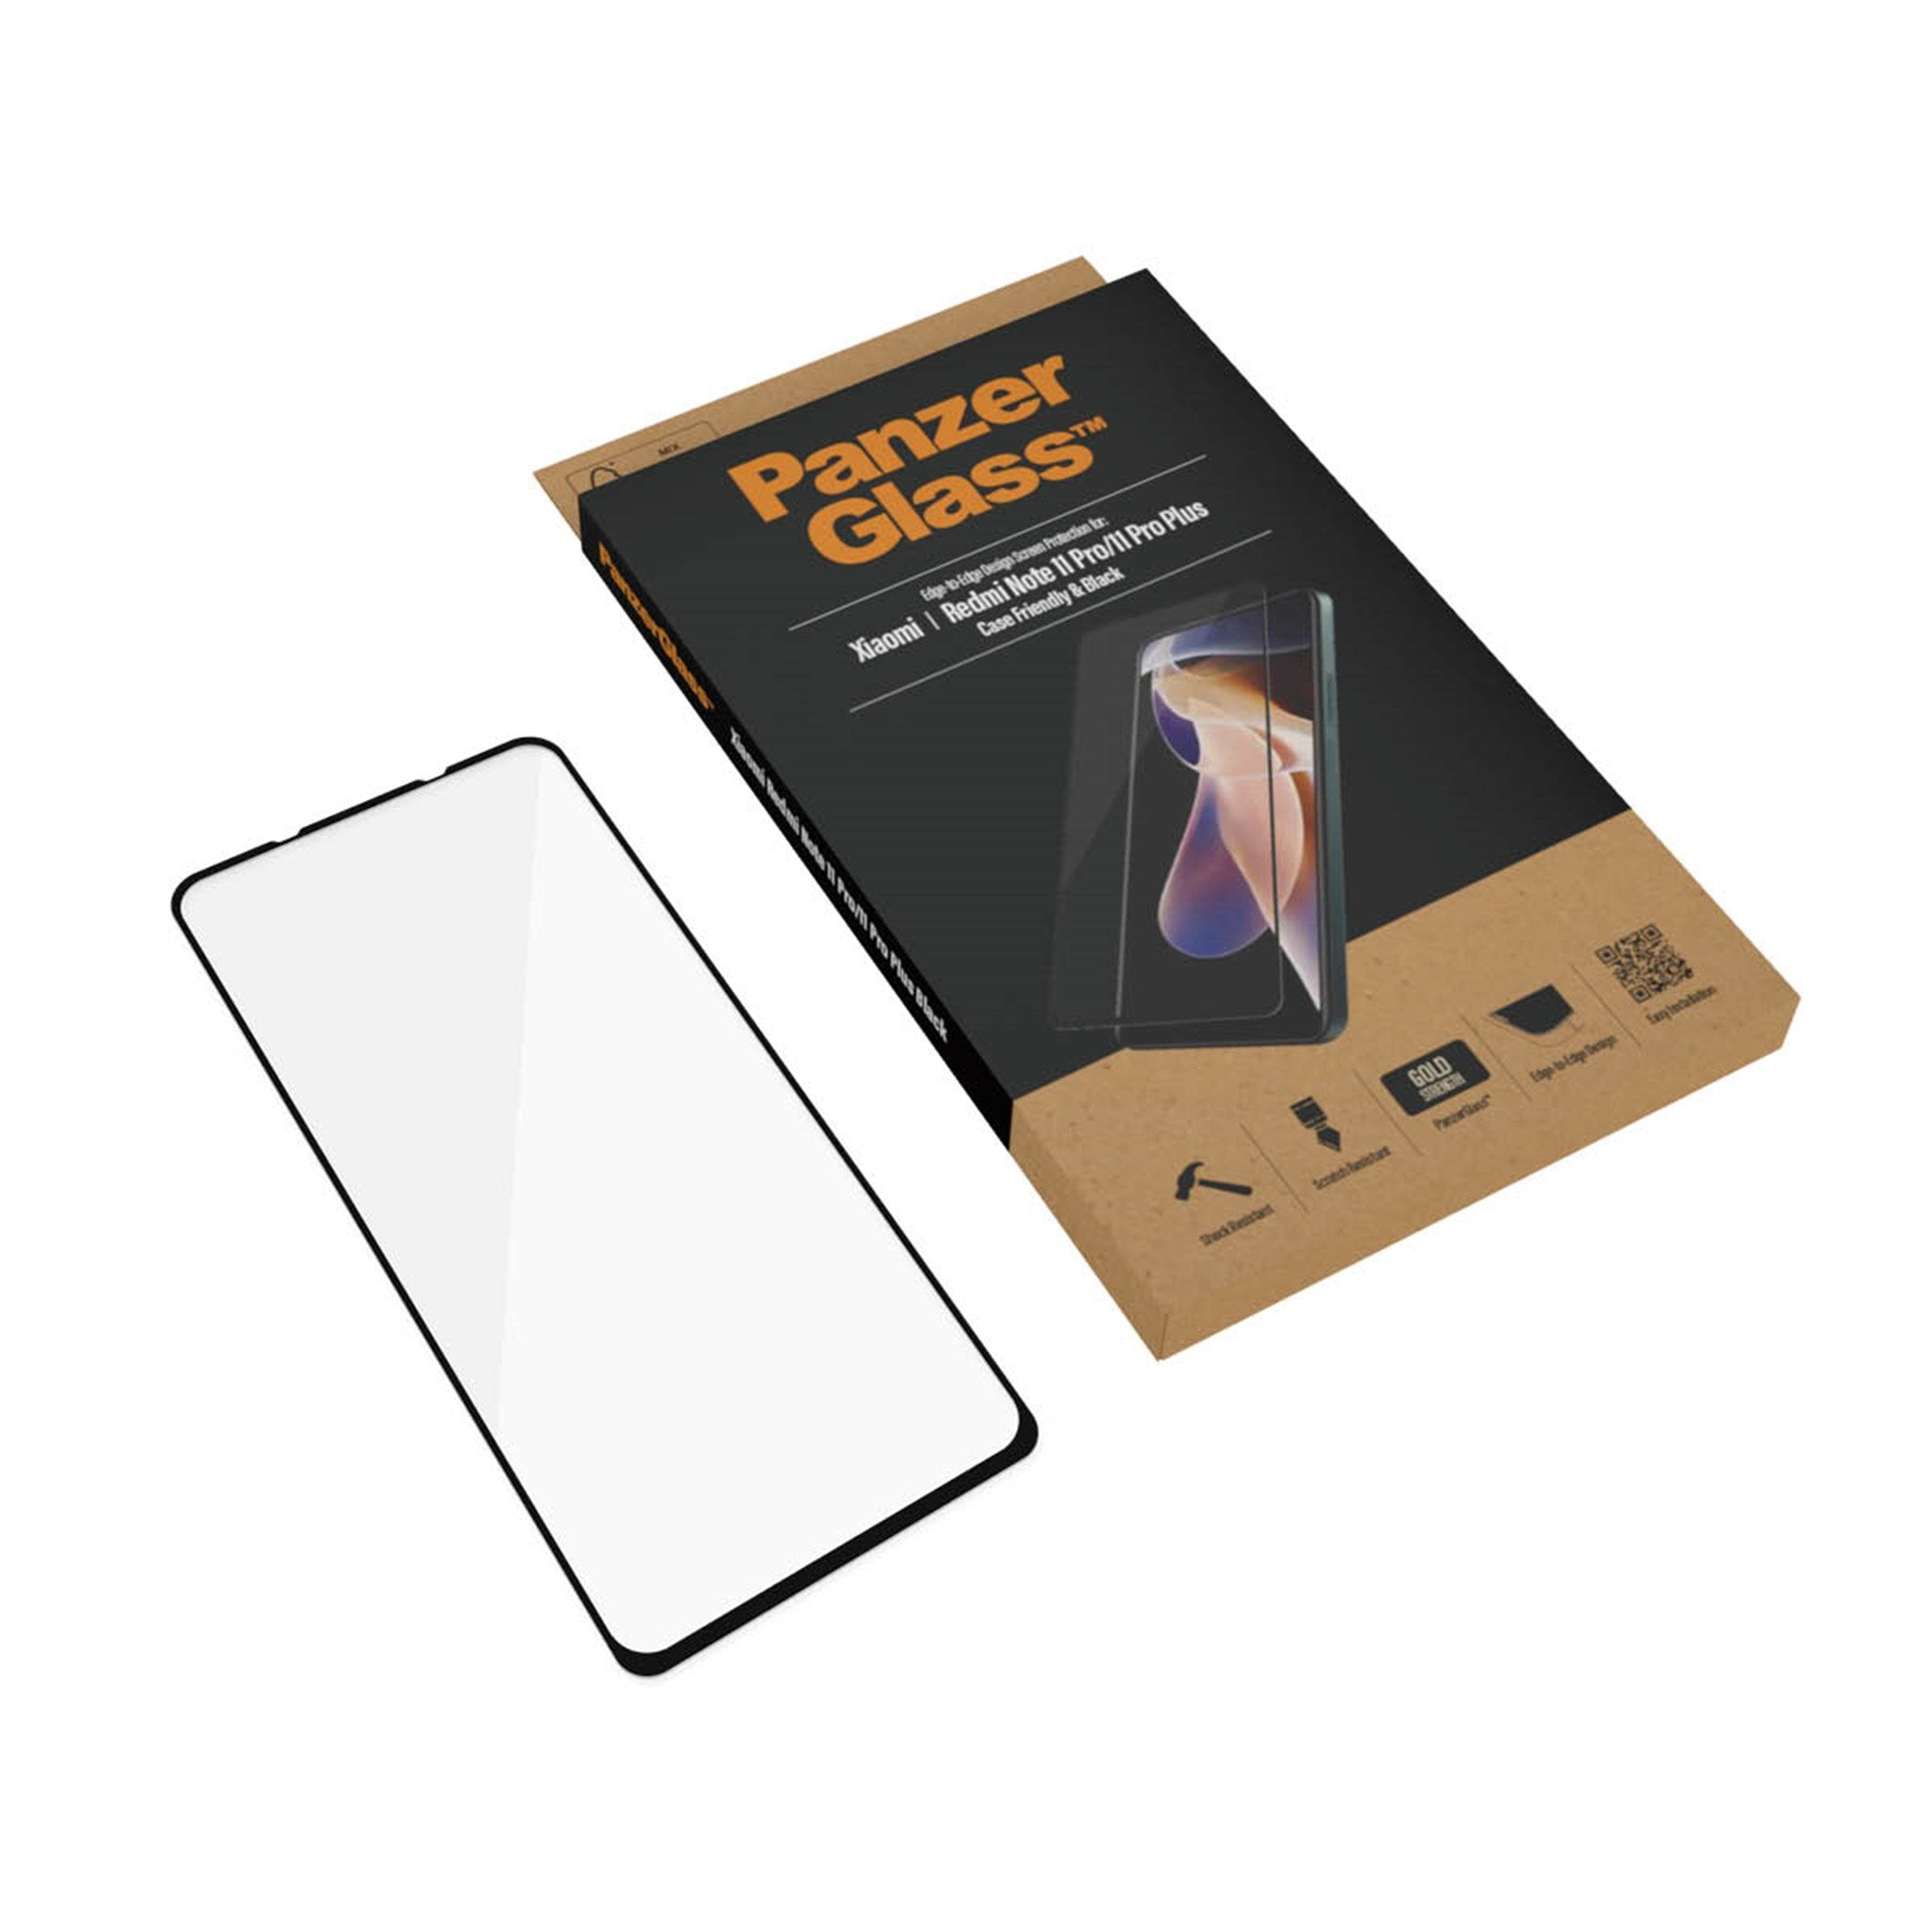 Plus) Pro Redmi Note Pro | PANZERGLASS Displayschutz Note Xiaomi Smartphone(für Redmi 11 11